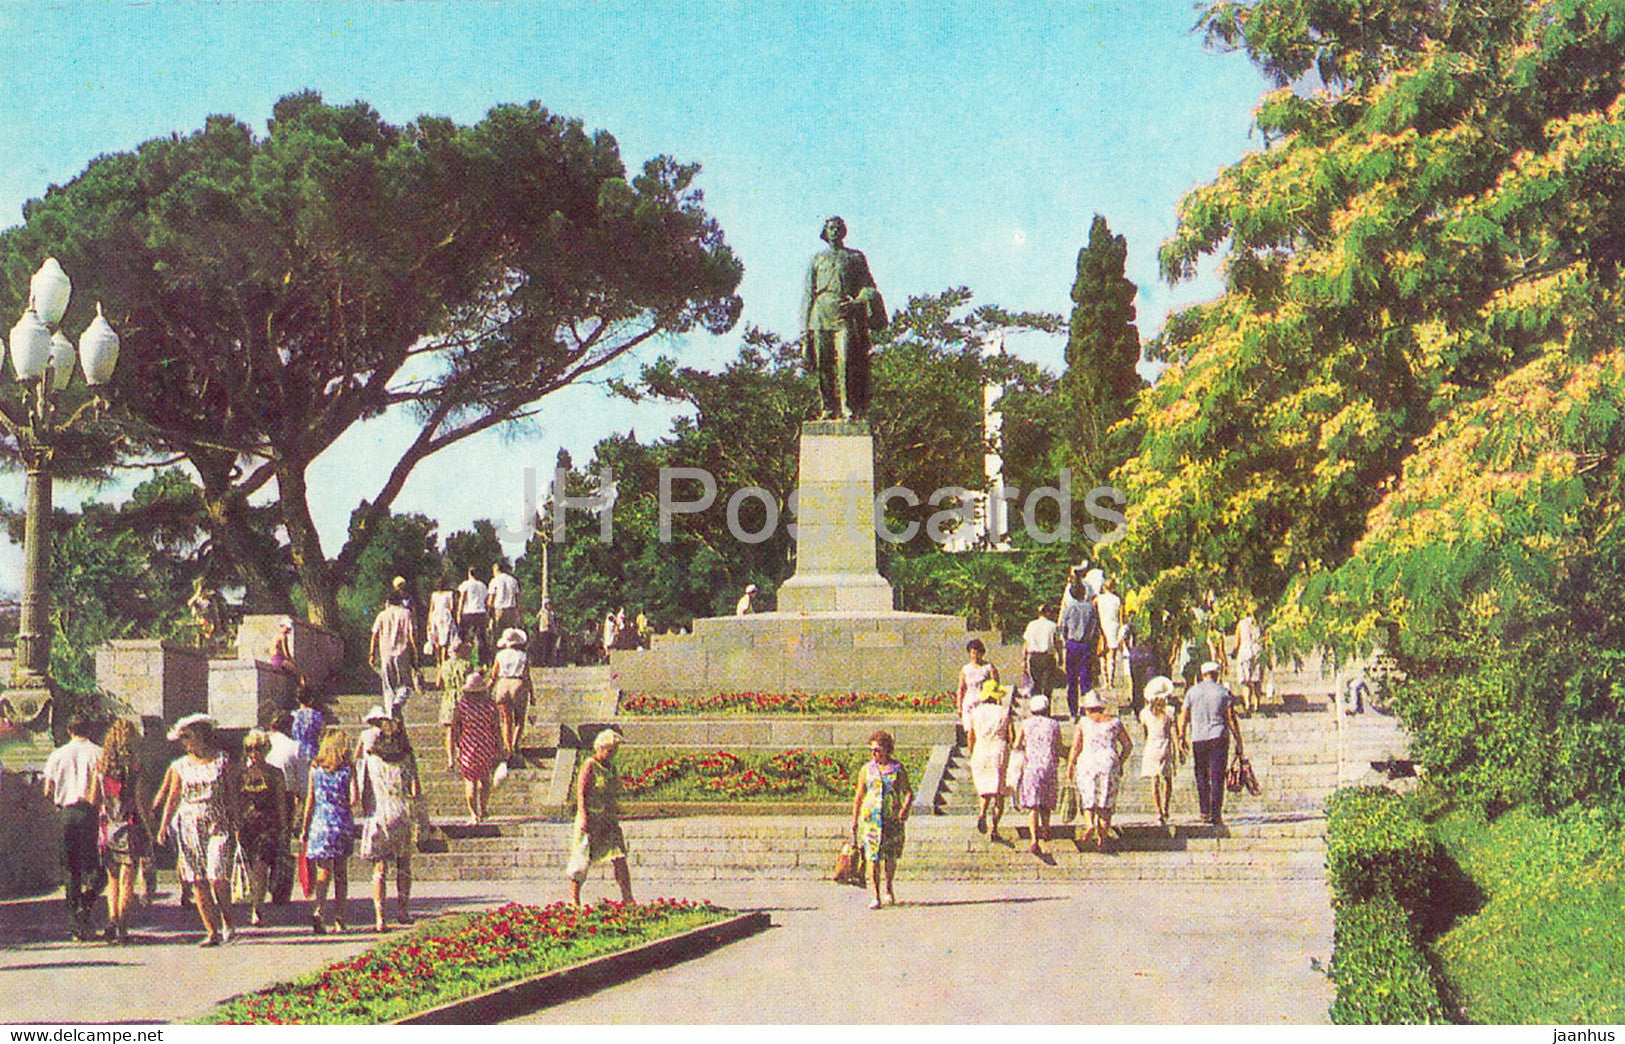 Yalta - Crimea - monument to Russian writer Gorky - 1976 - Ukraine USSR - unused - JH Postcards